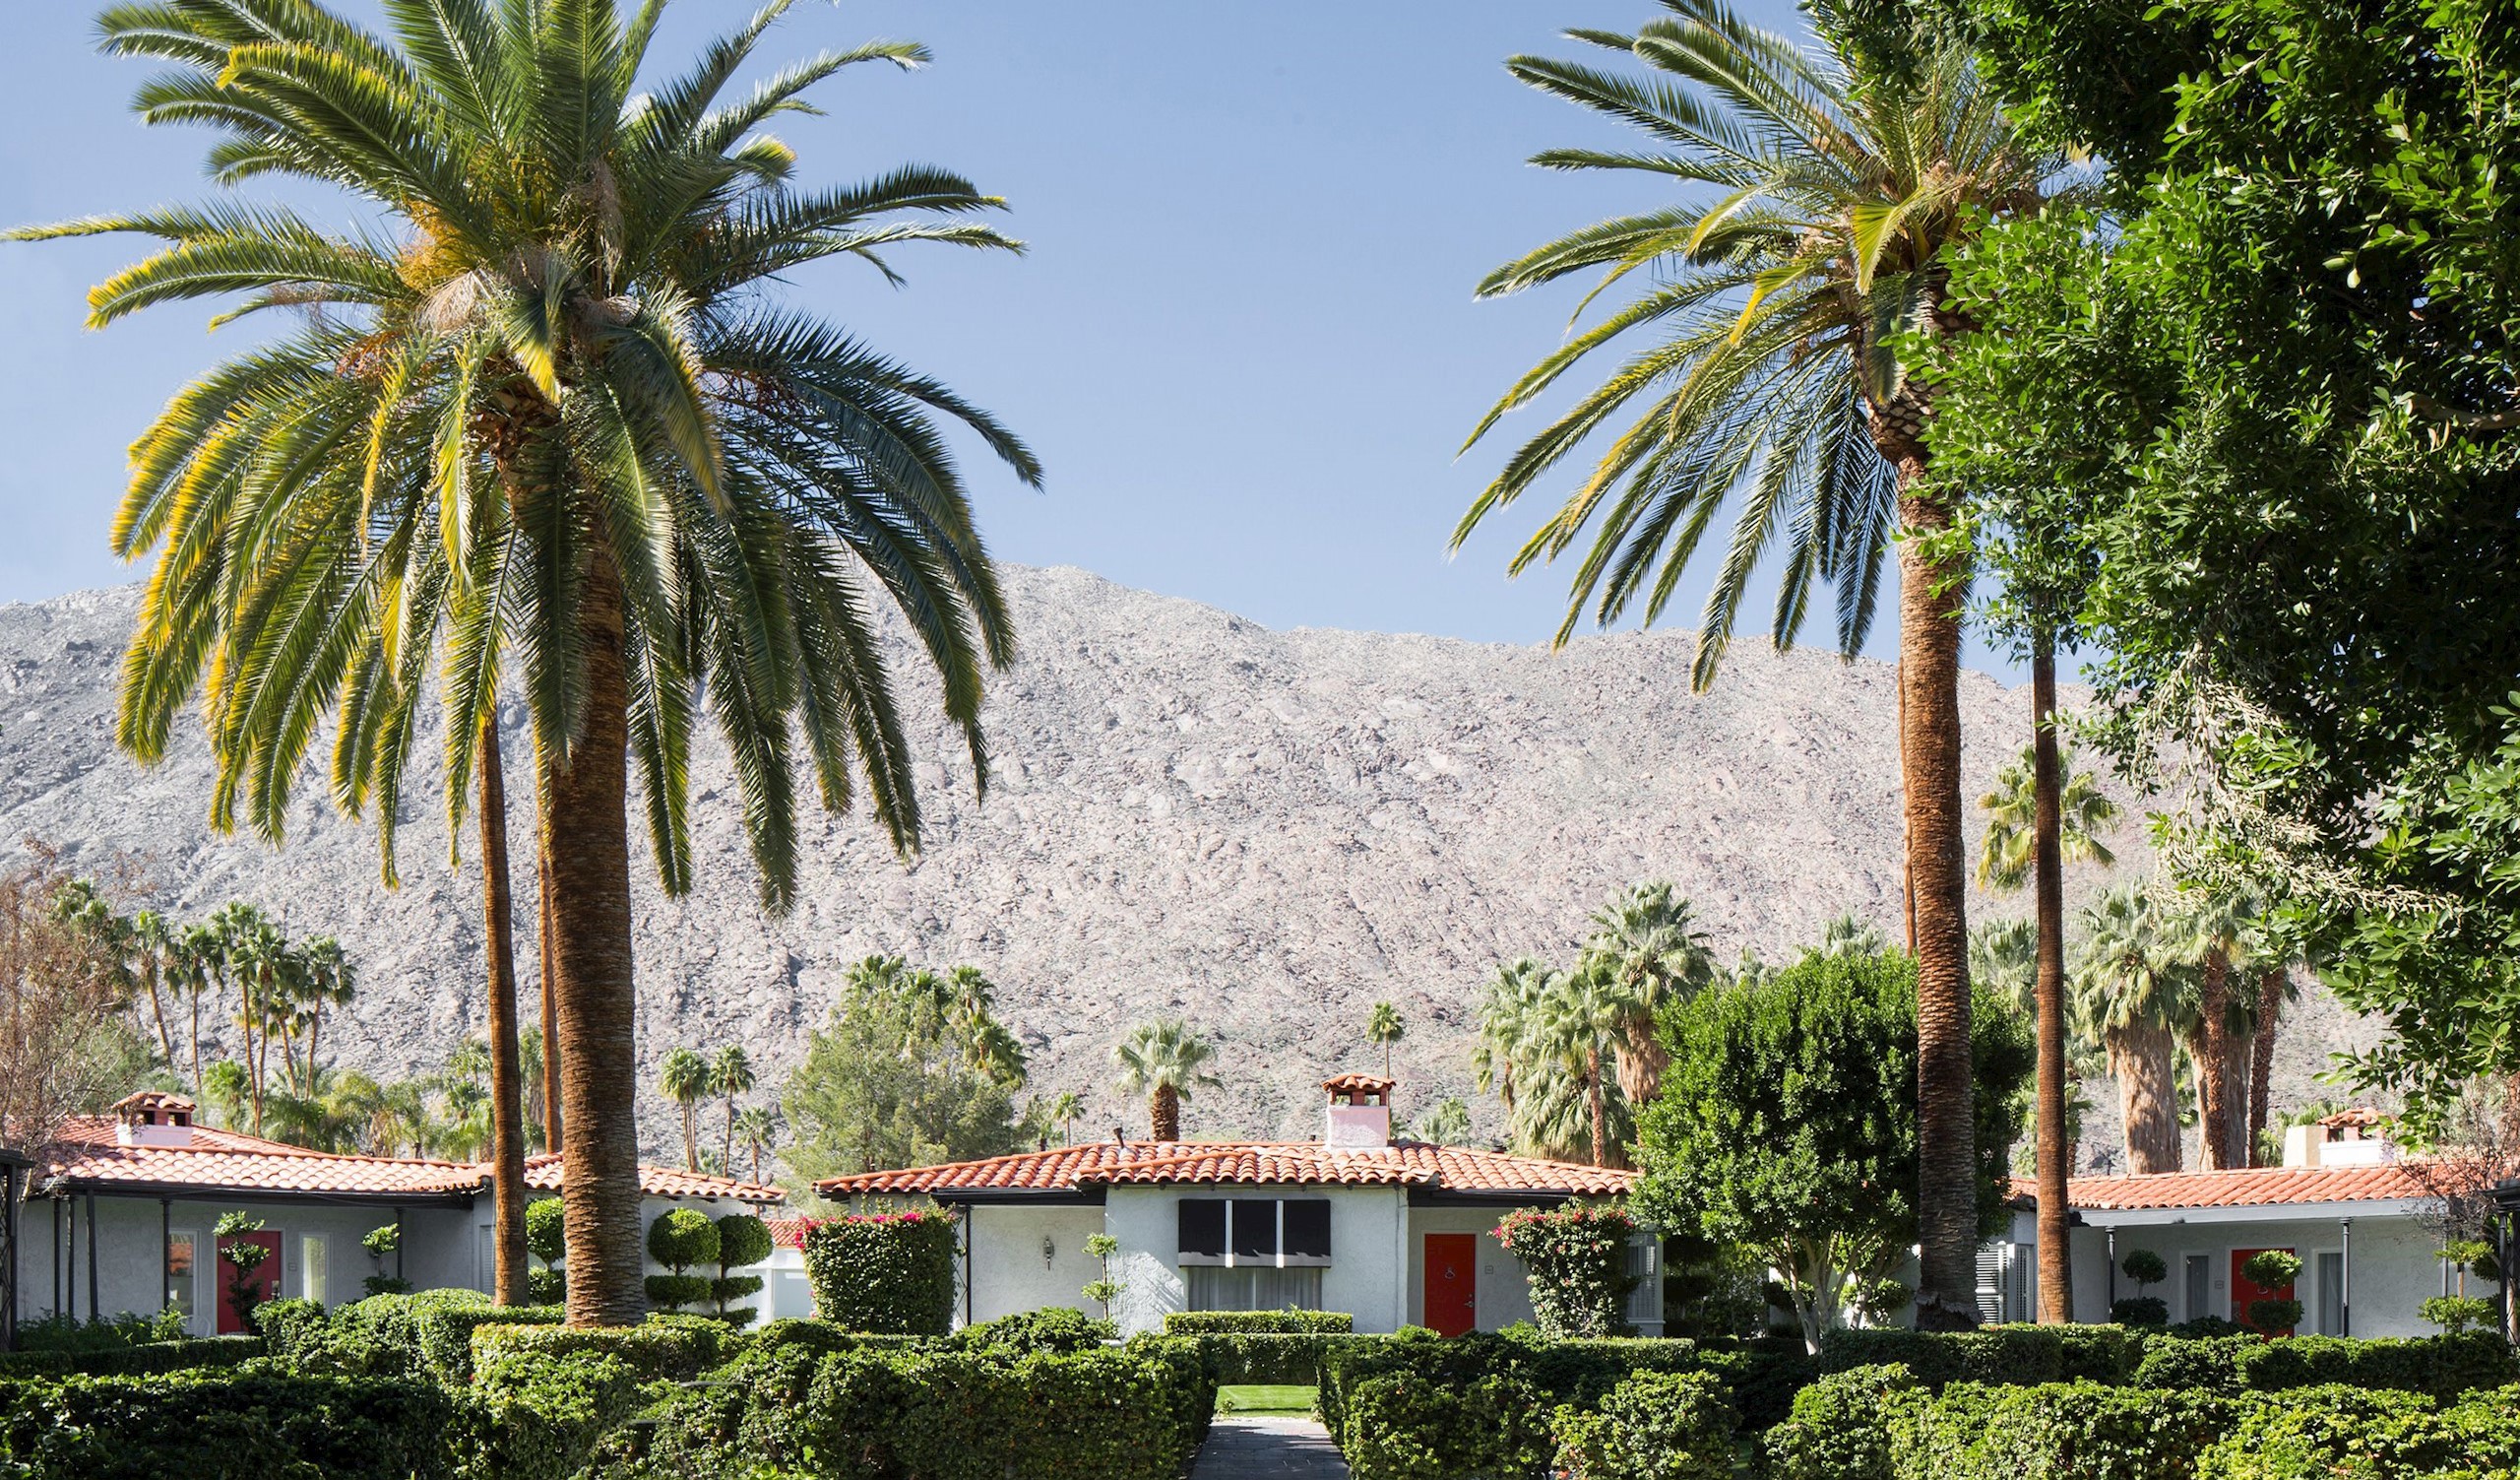 Avalon Hotel Palm Springs Landscape in Palm Springs